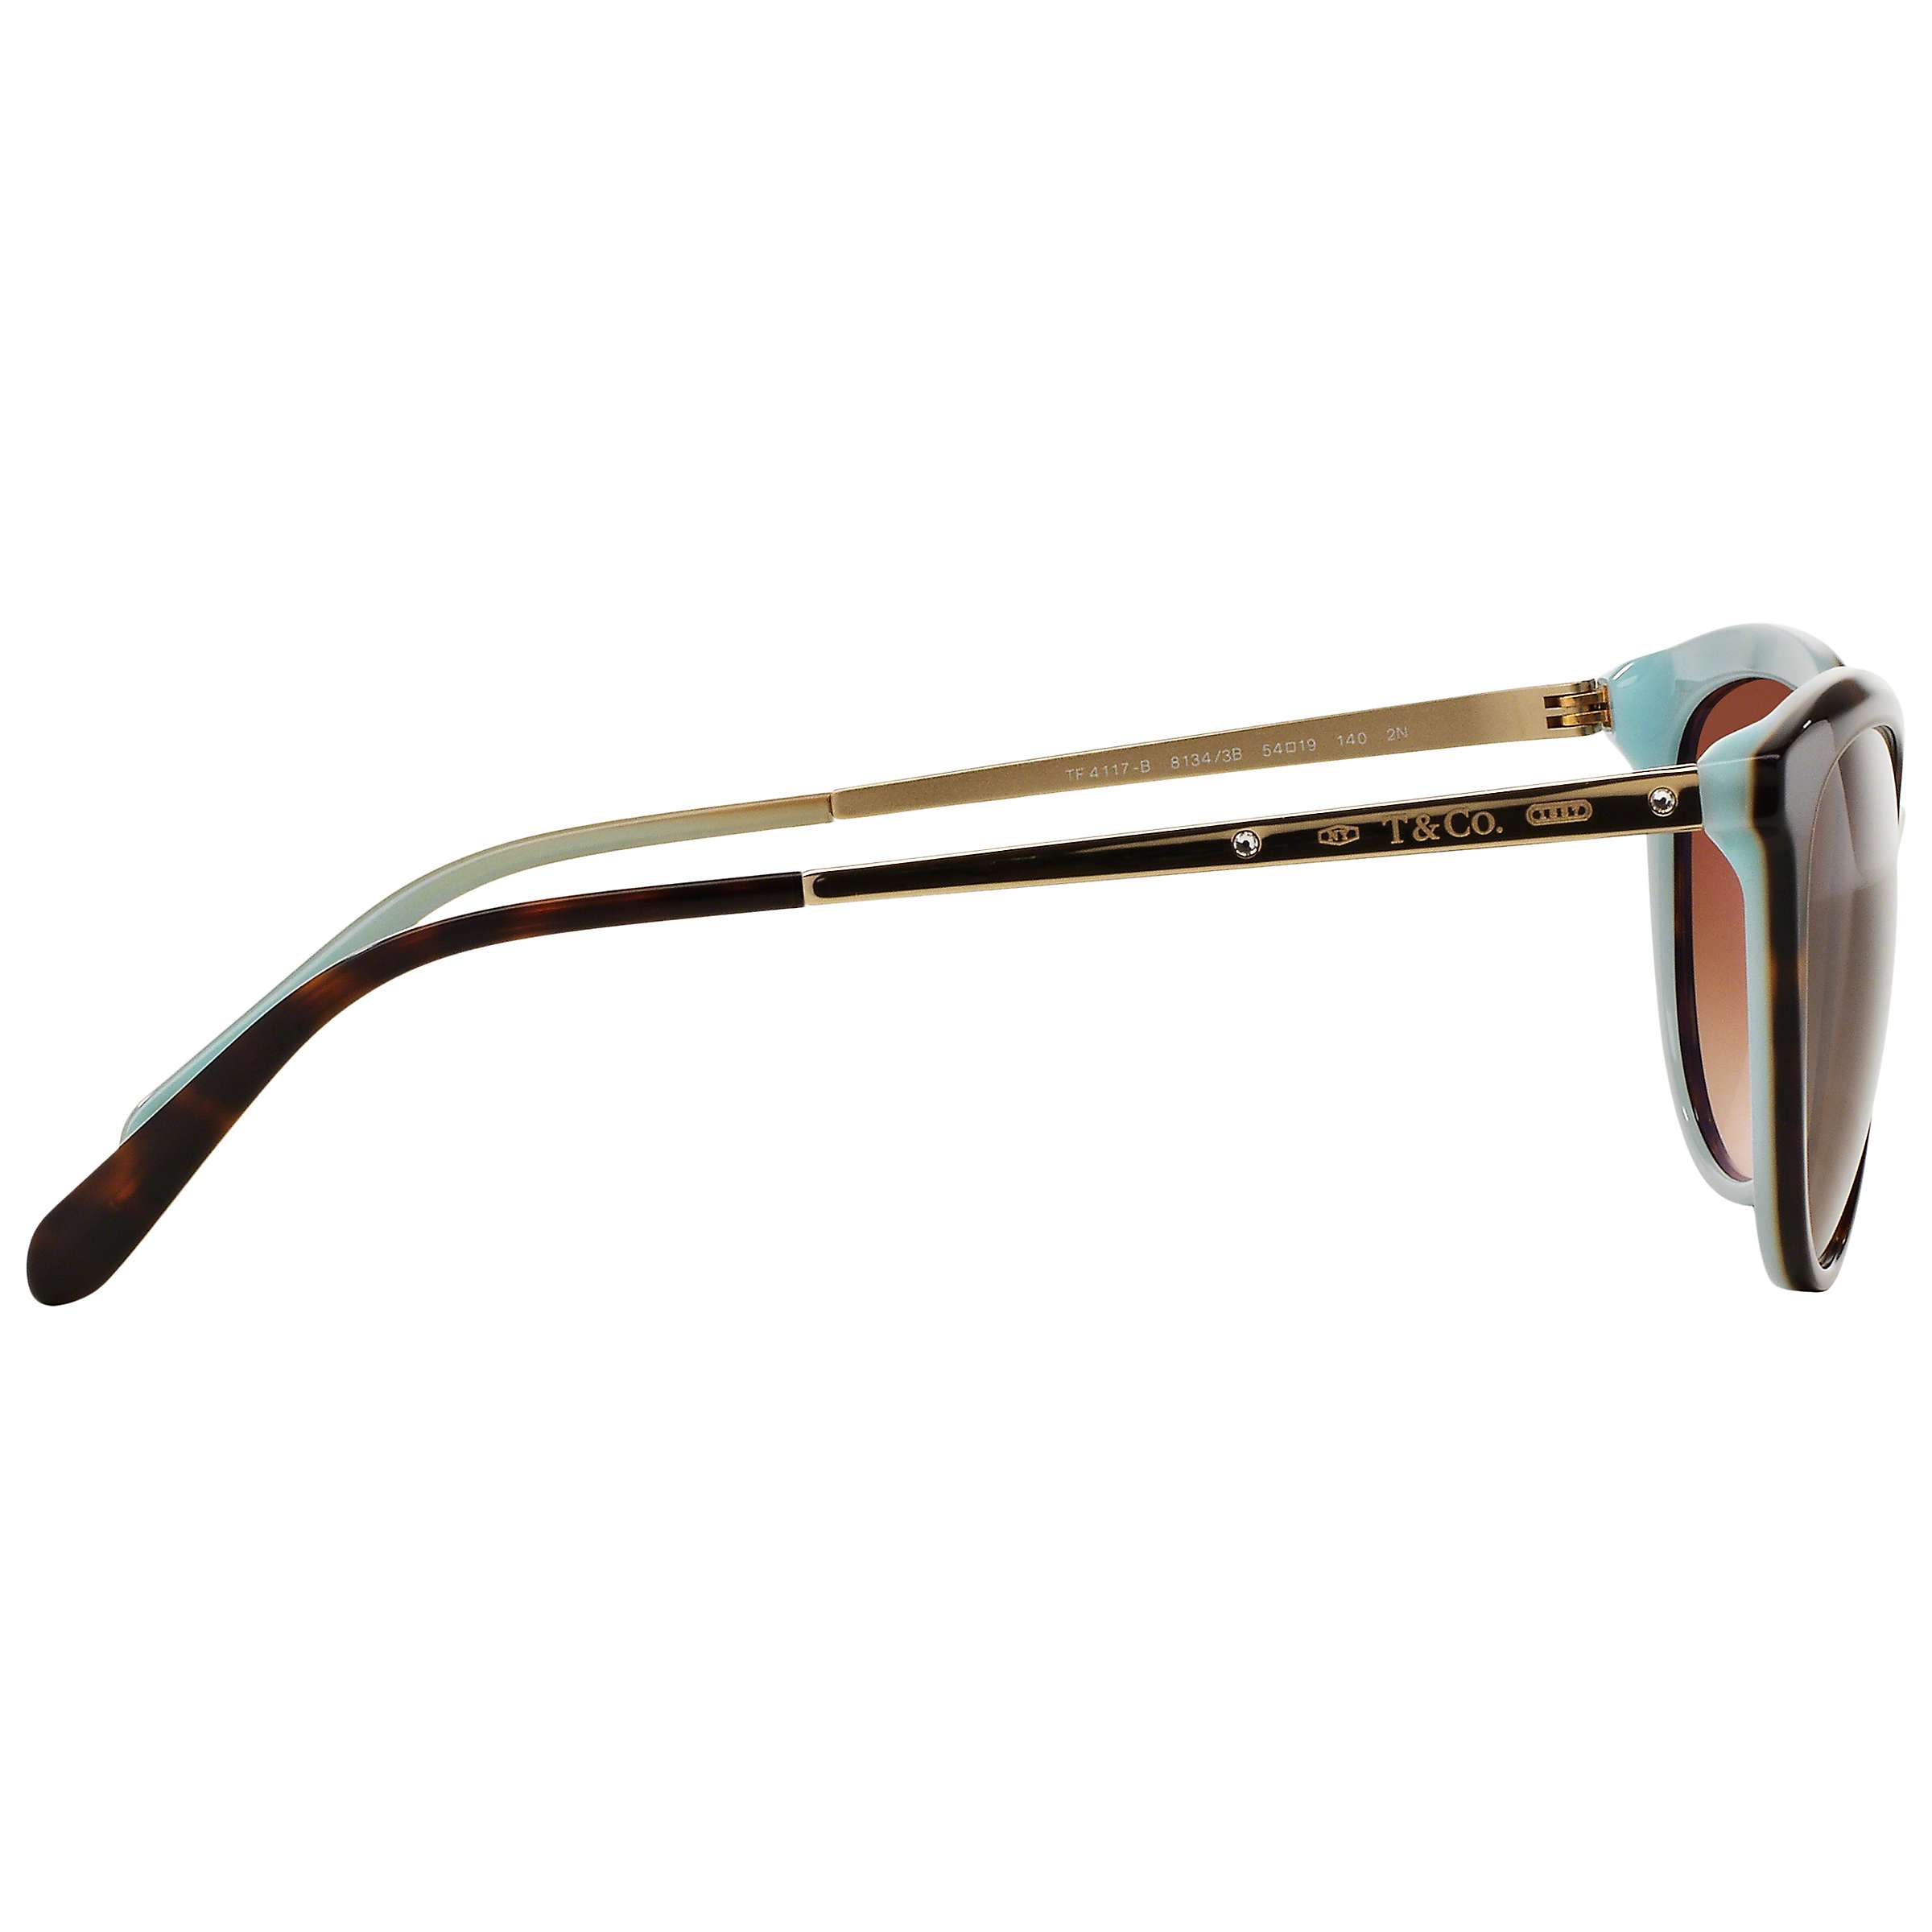 Buy Tiffany & Co TF4117B Gradient Oval Sunglasses, Tortoise Online at johnlewis.com